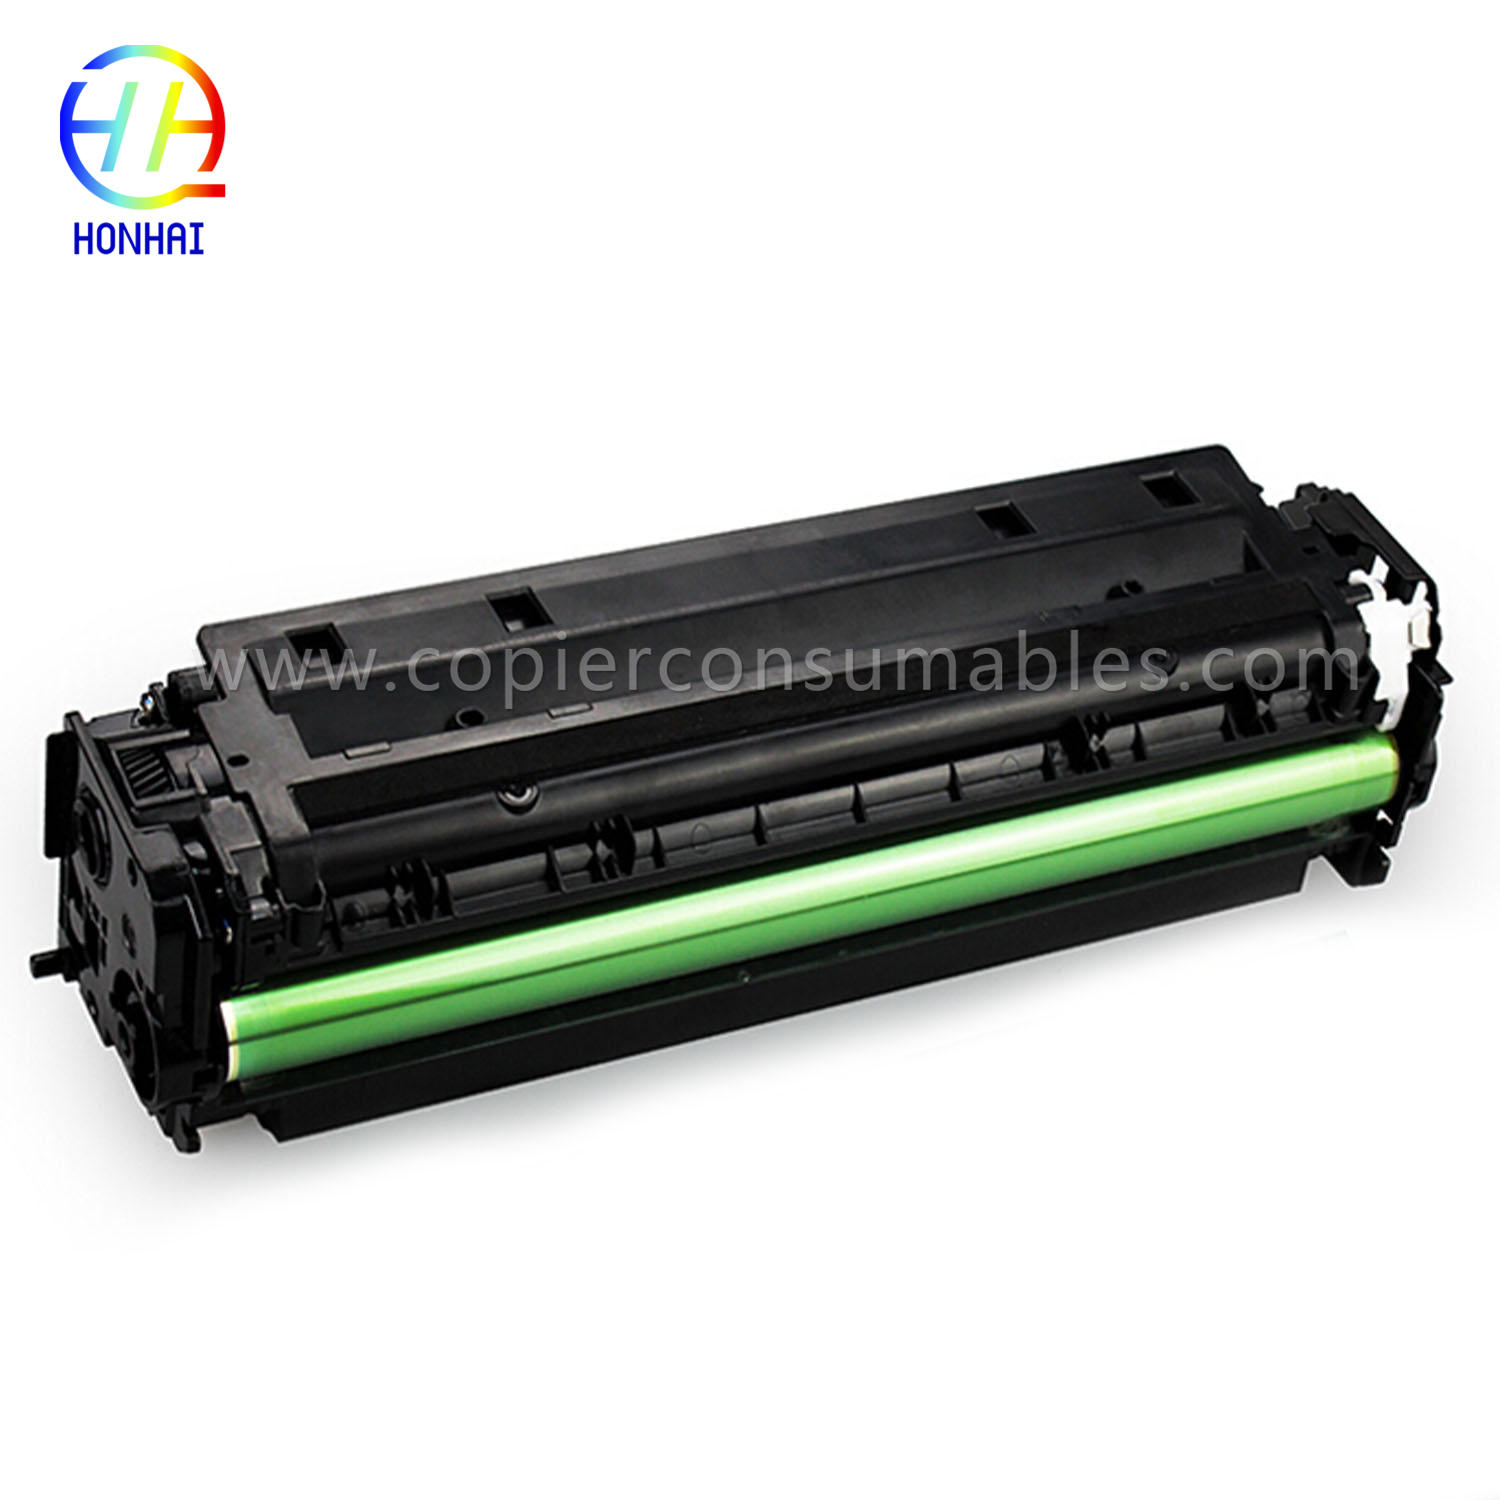 HP Laserjet PRO 400 Color Mfp M451nw M451DN M451dw PRO 300 Color Mfp M375nw (CE410A) အတွက် Toner Cartridge